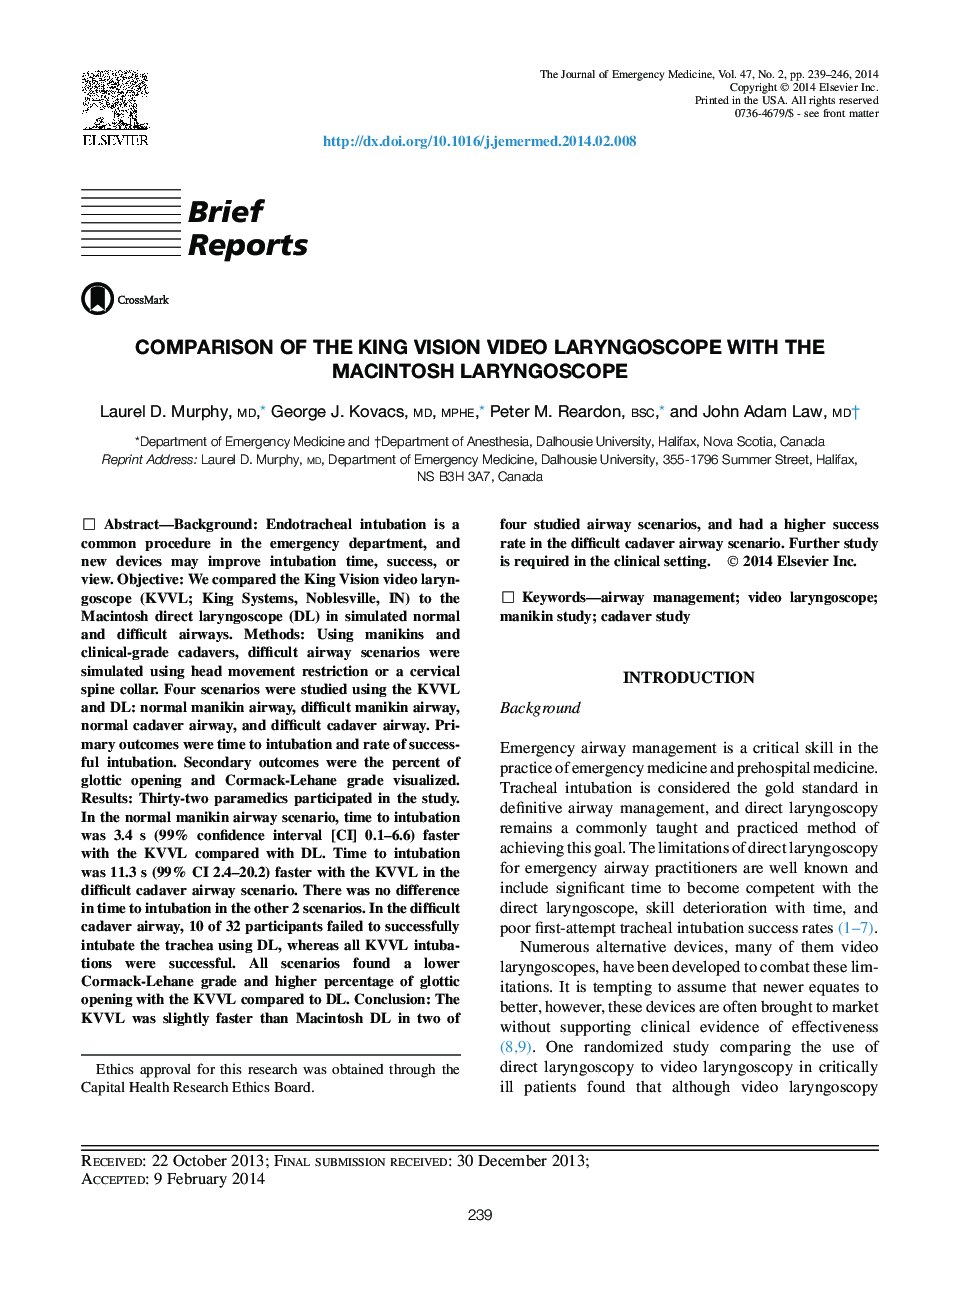 Comparison of the King Vision Video Laryngoscope with the Macintosh Laryngoscope 